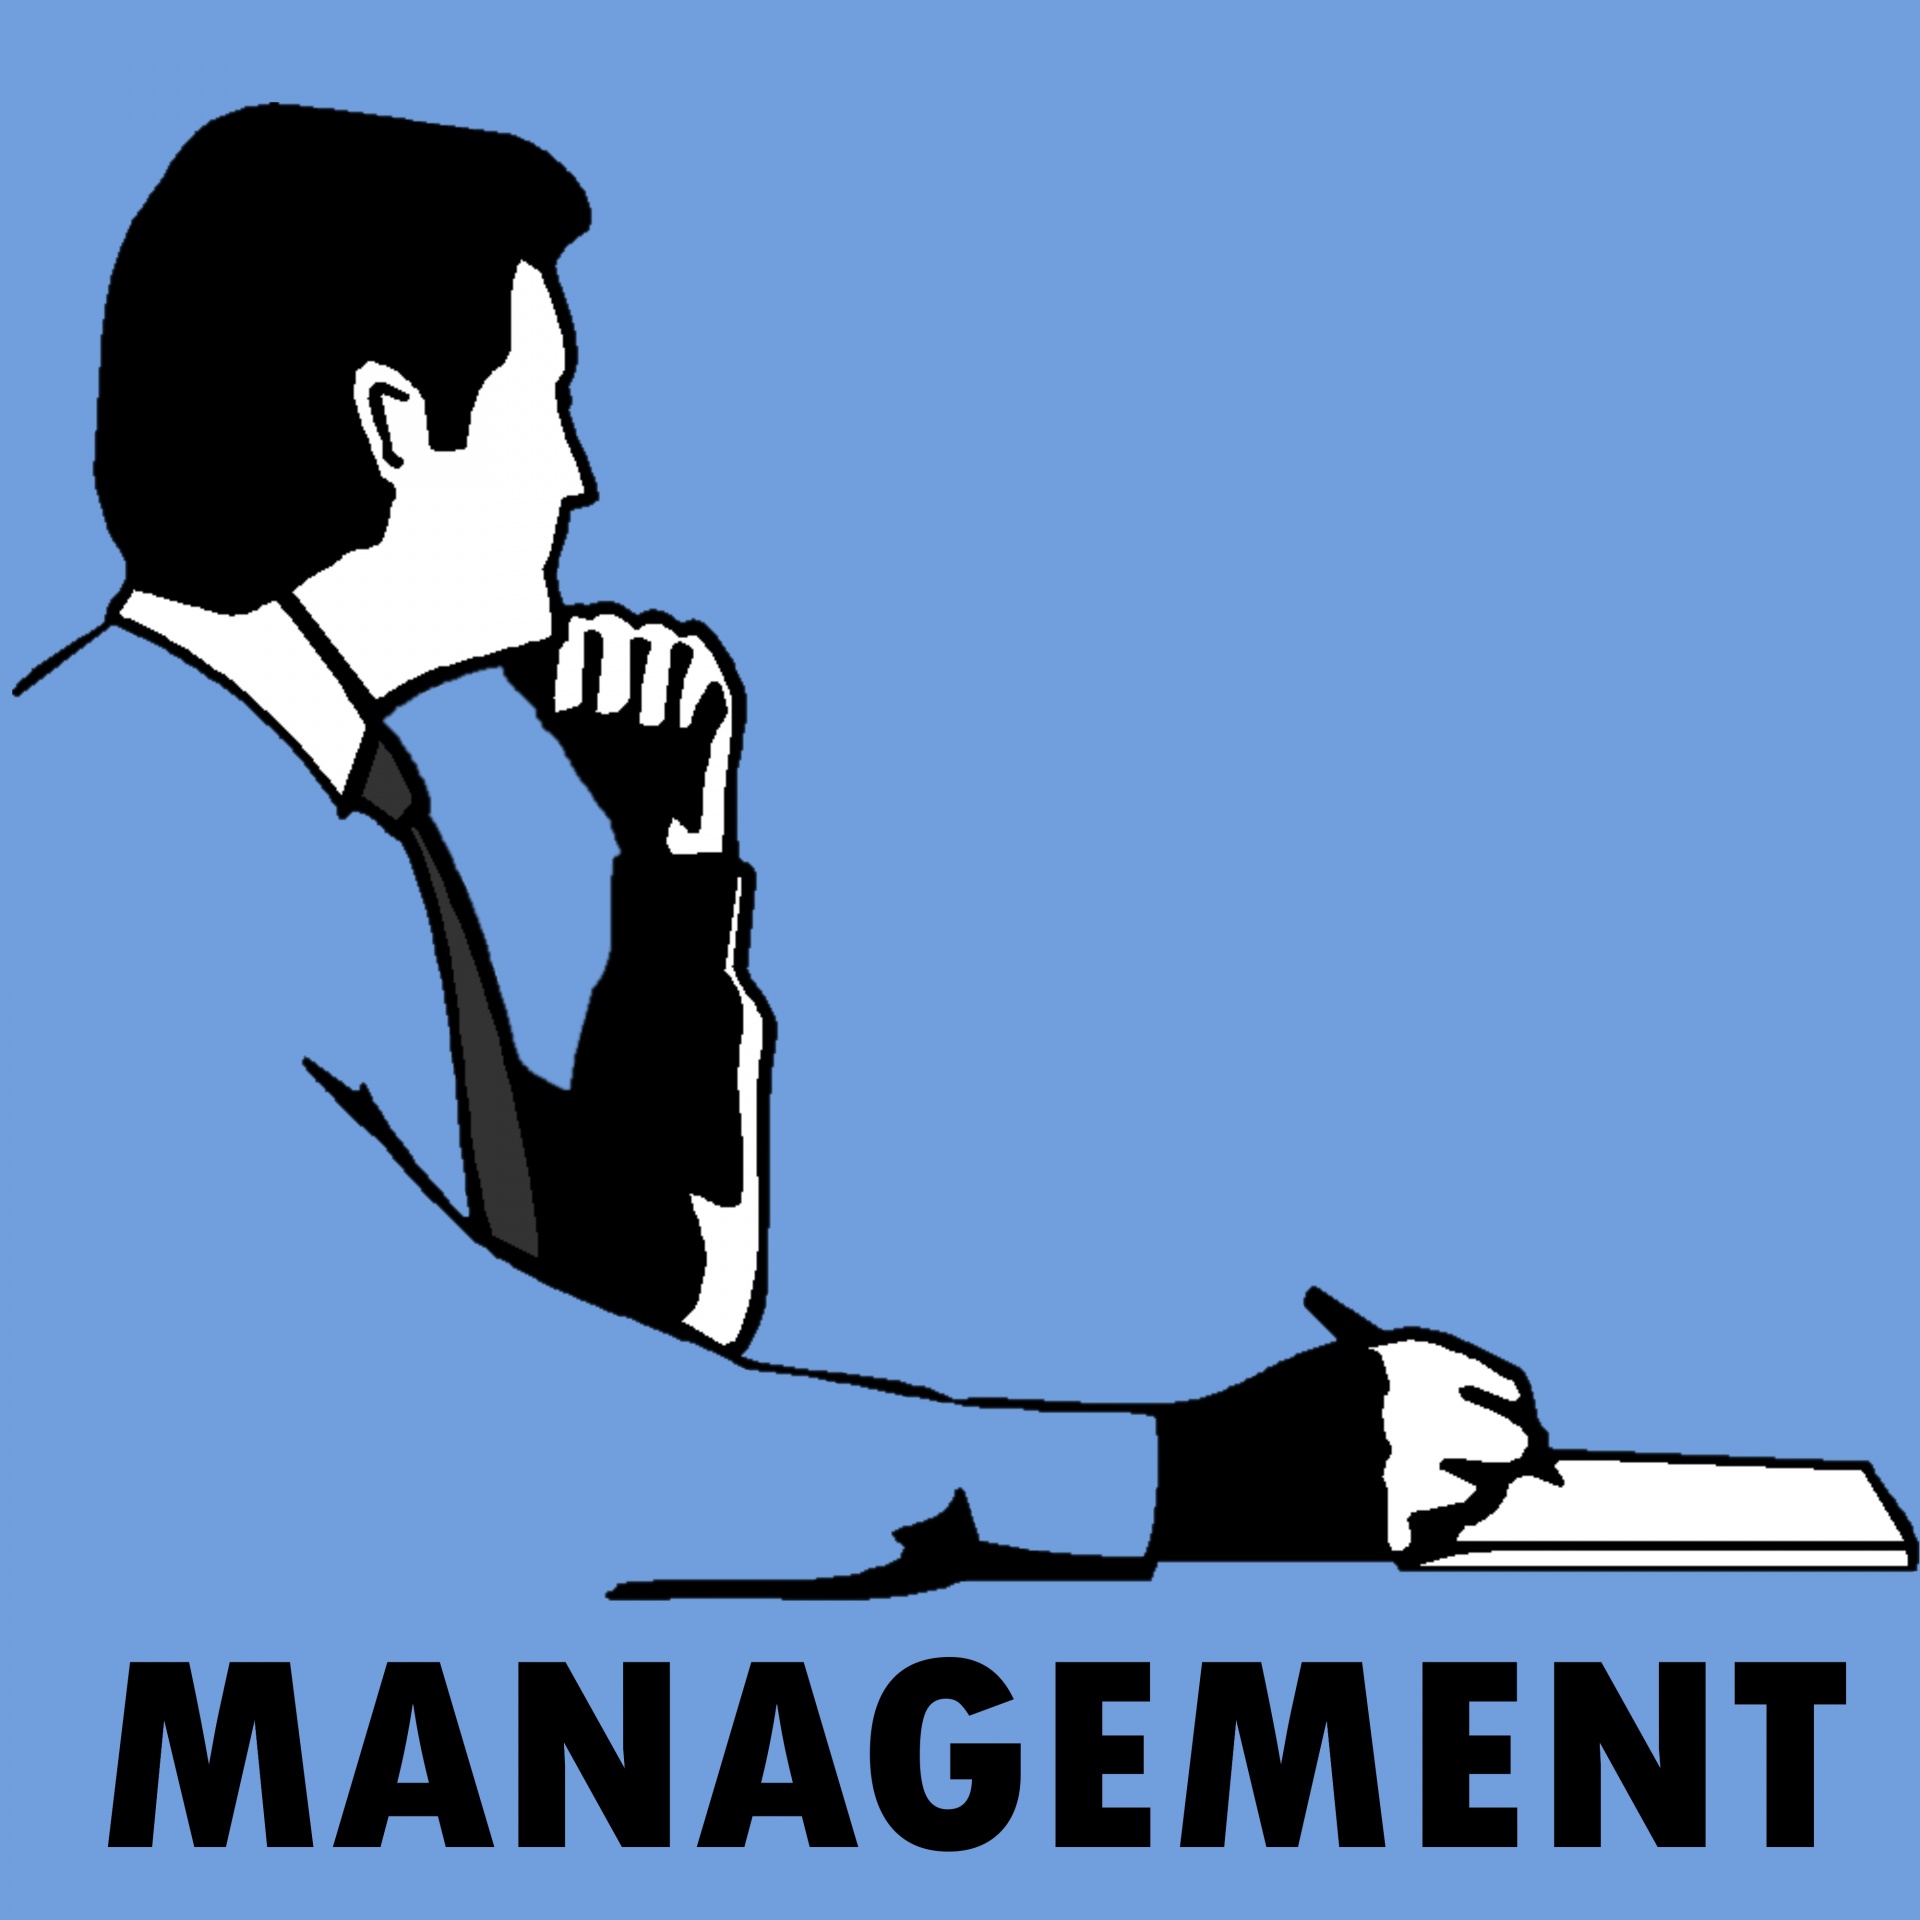 Business Management Sign